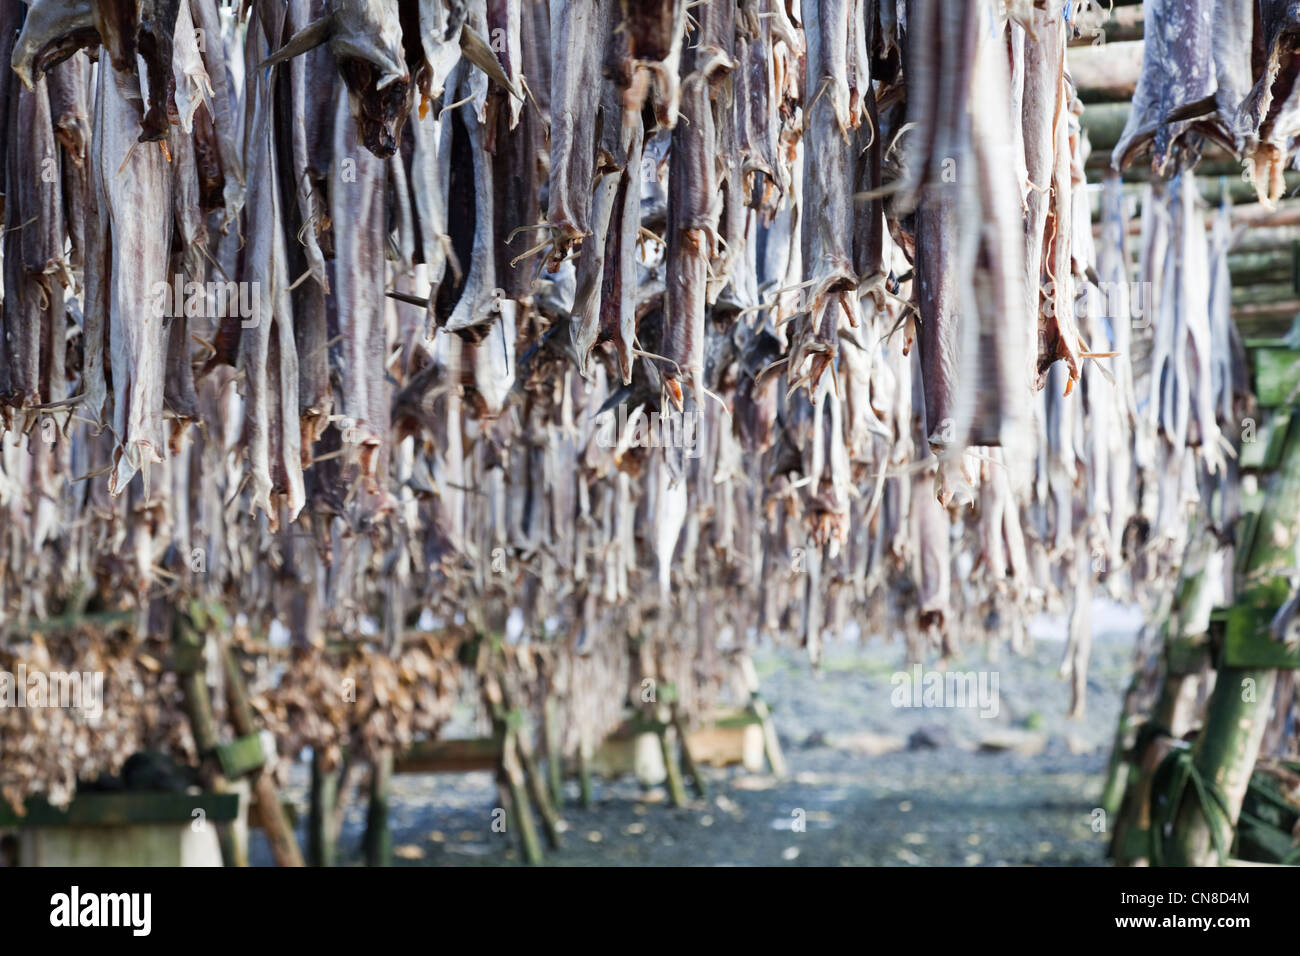 Reykjanes Peninsula, Southwest, Iceland. Very smelly fish drying on racks. Stock Photo